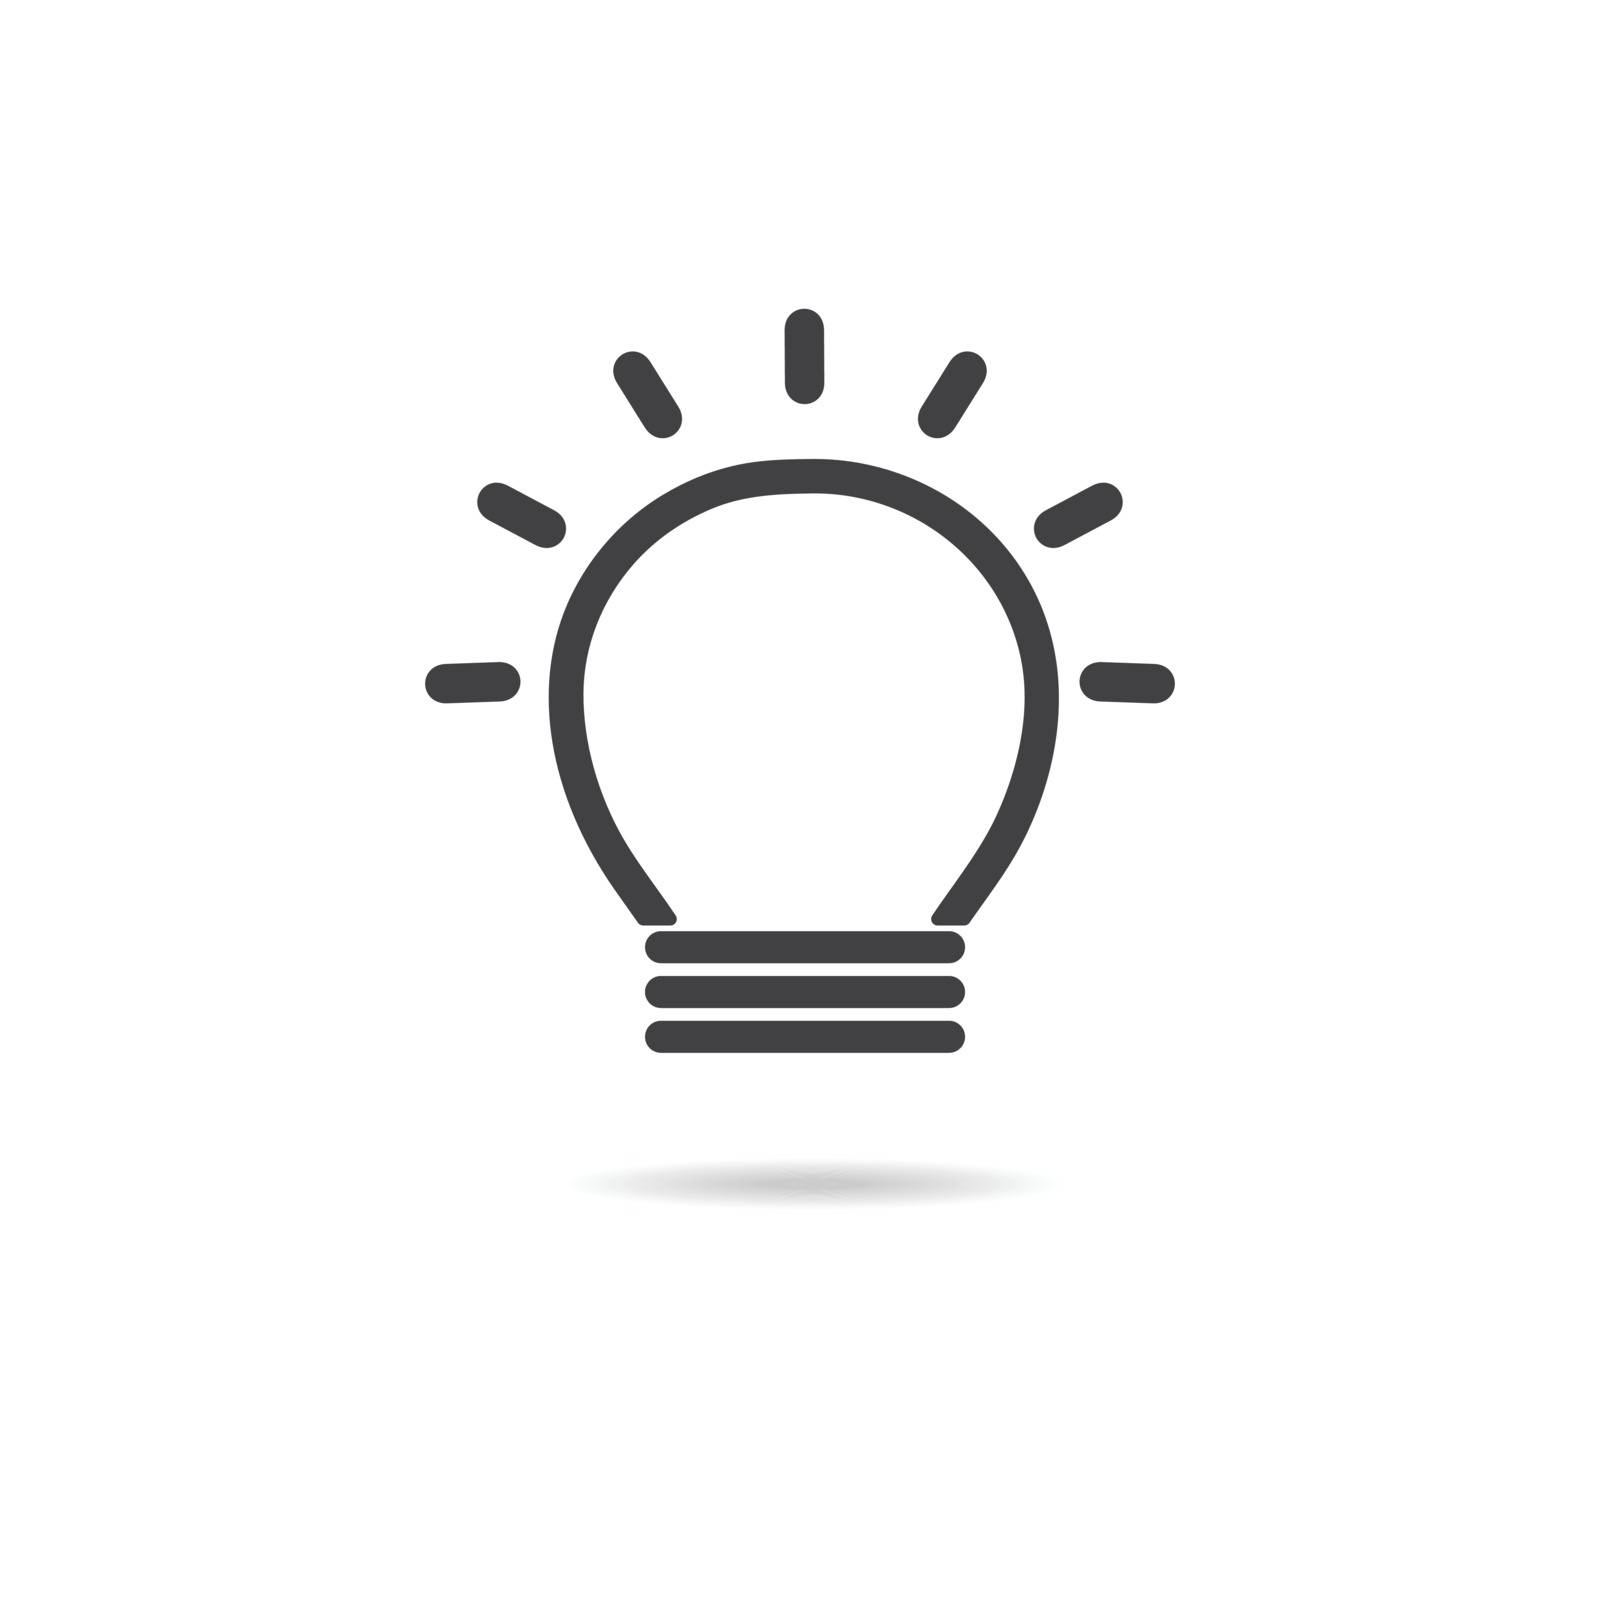 Light bulb logo.  light bulb icon symbol